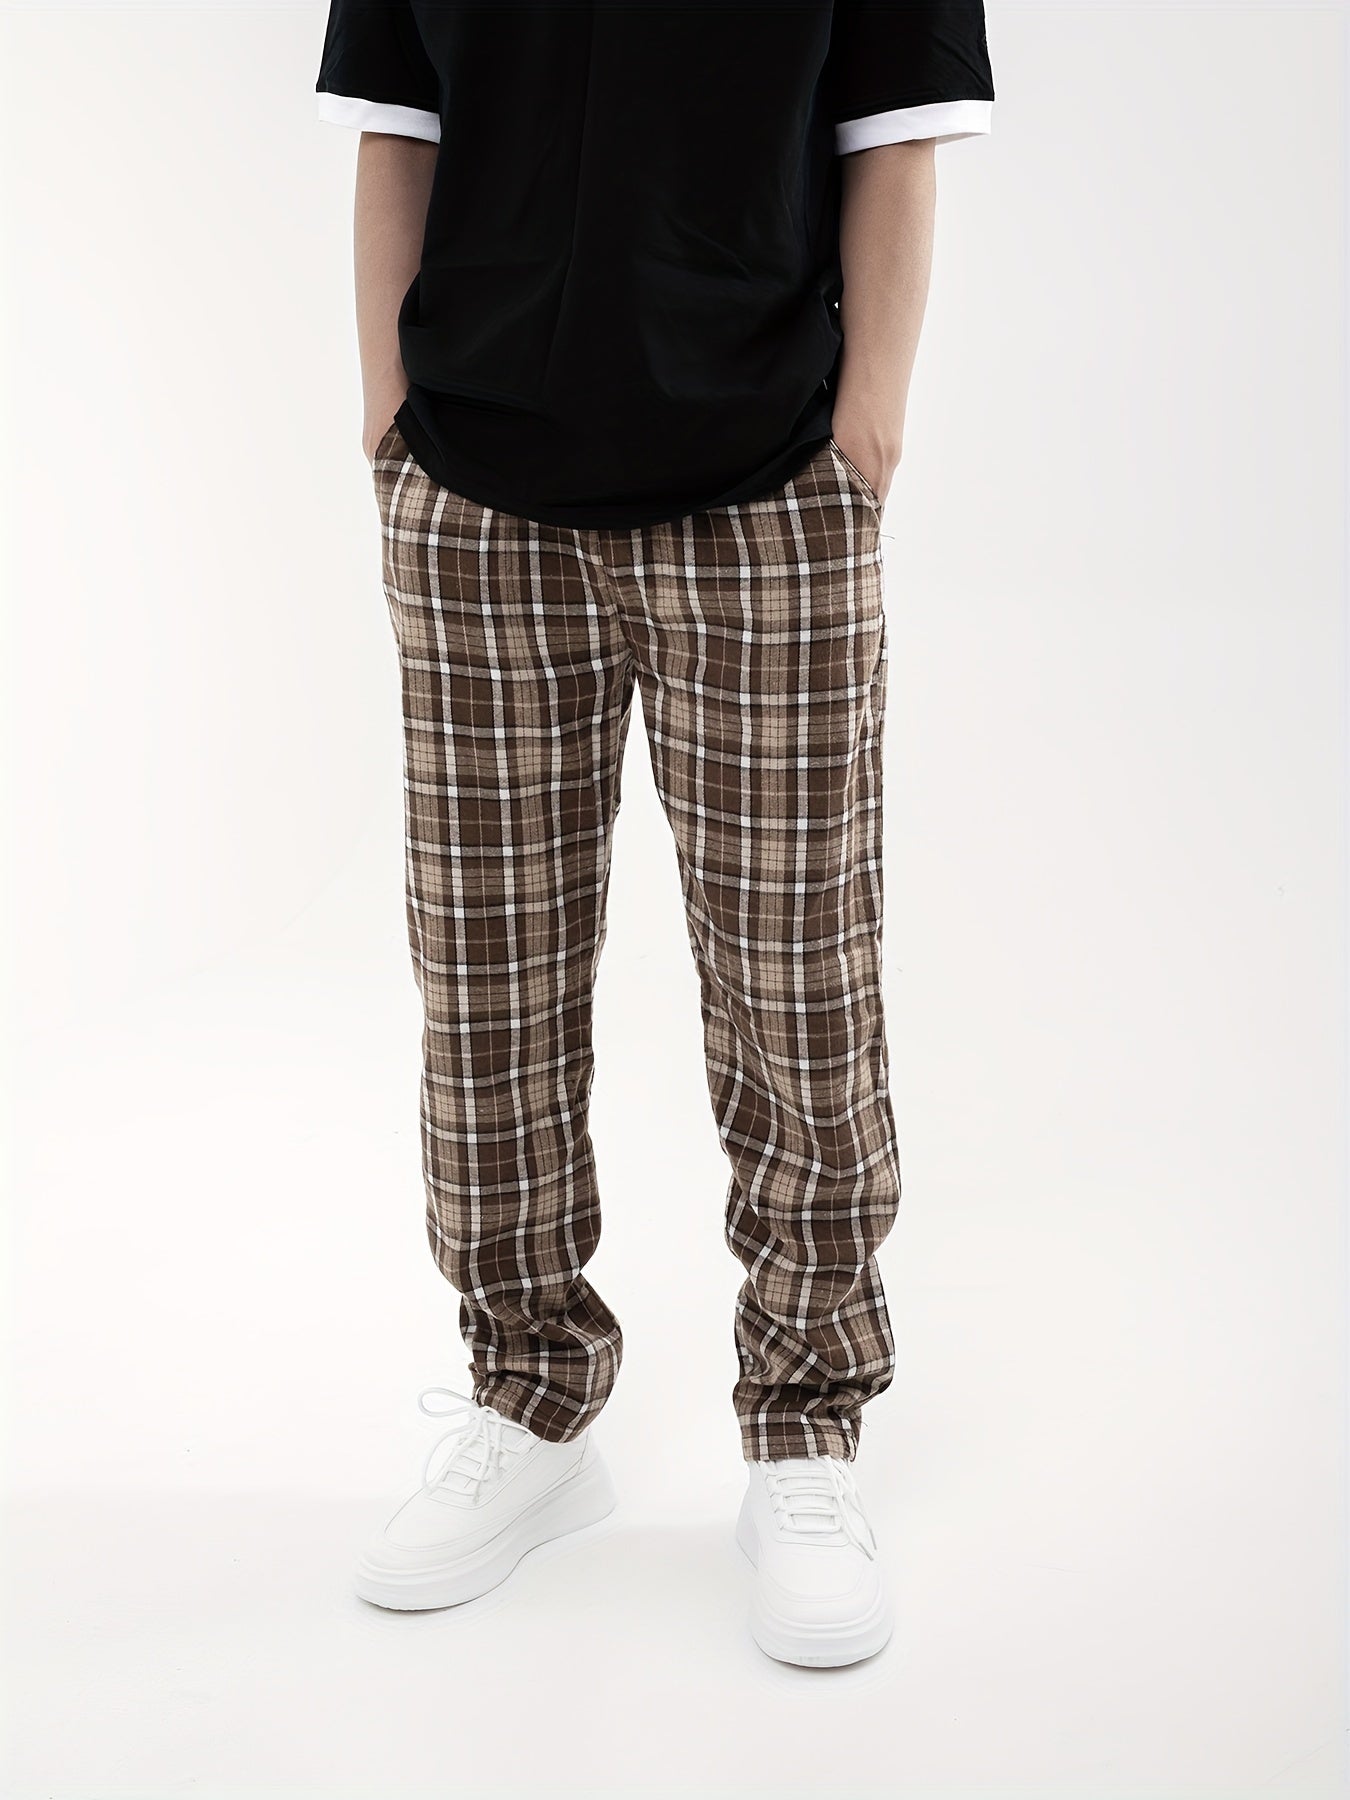 Men's Drawstring Wide Leg Pants   Trendy Checkered Pattern Casual Baggy Pants Streetwear Hiphop Rapper Style